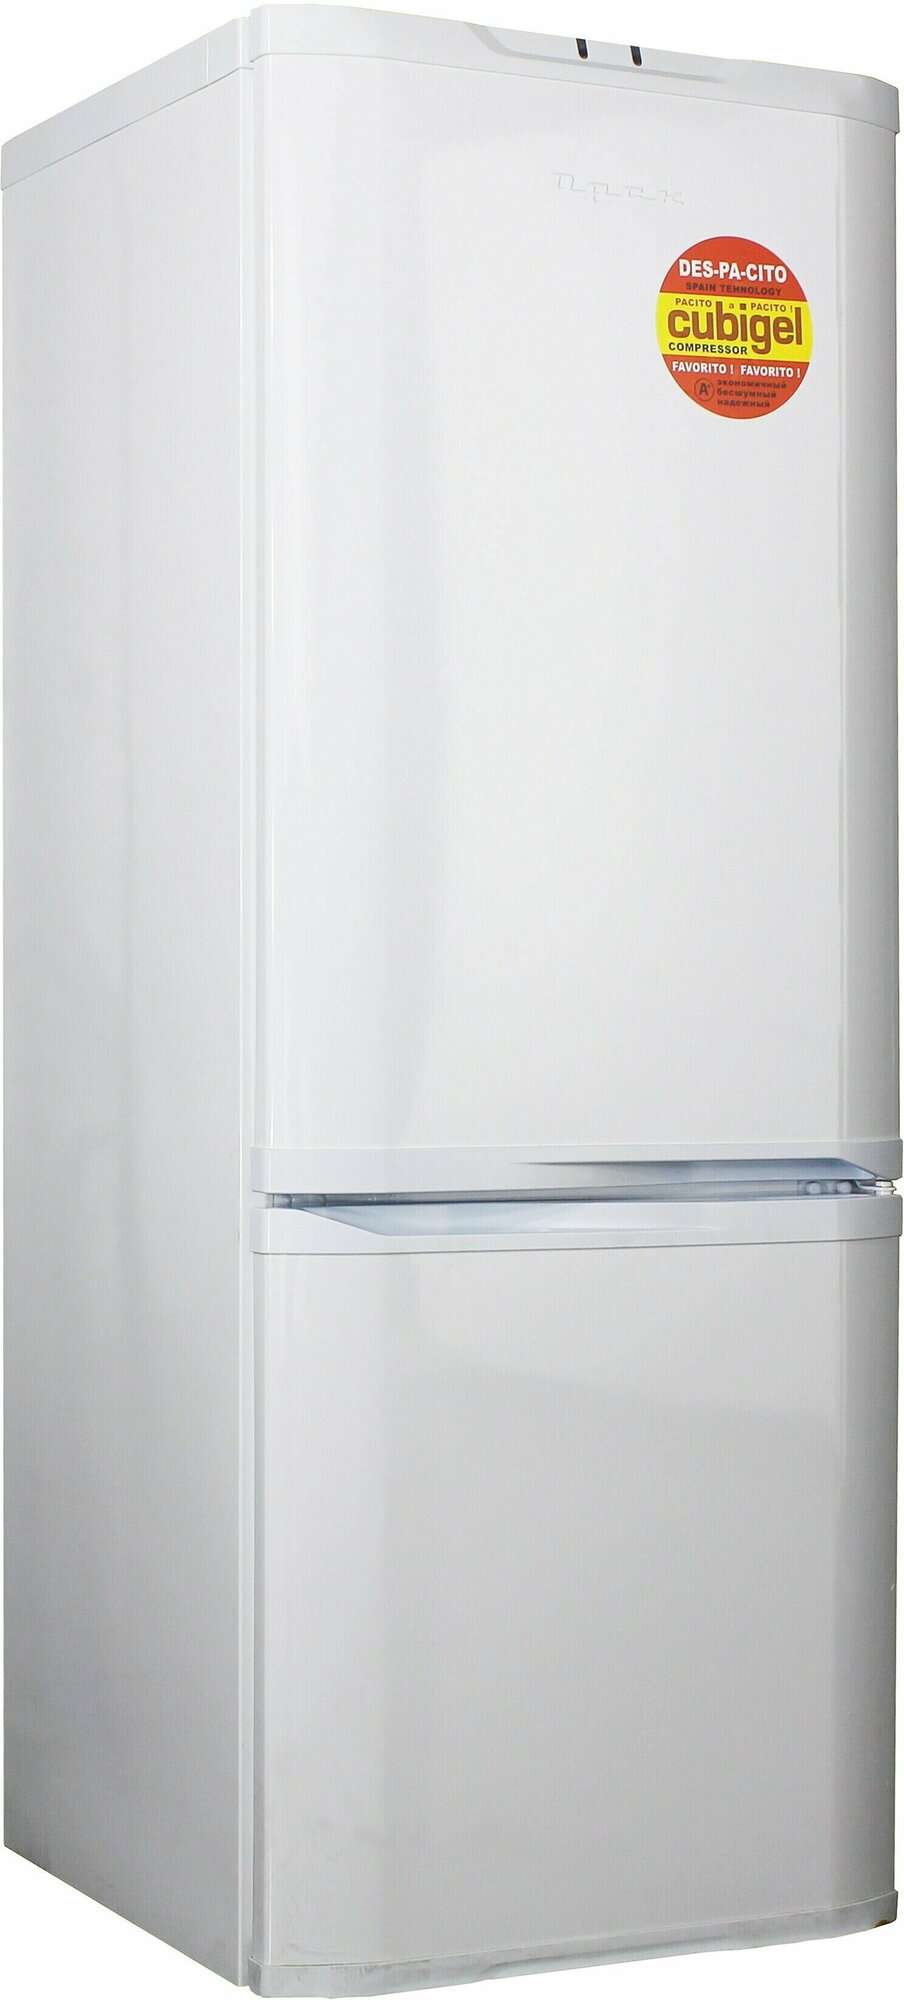 Холодильник орск 171B, белый